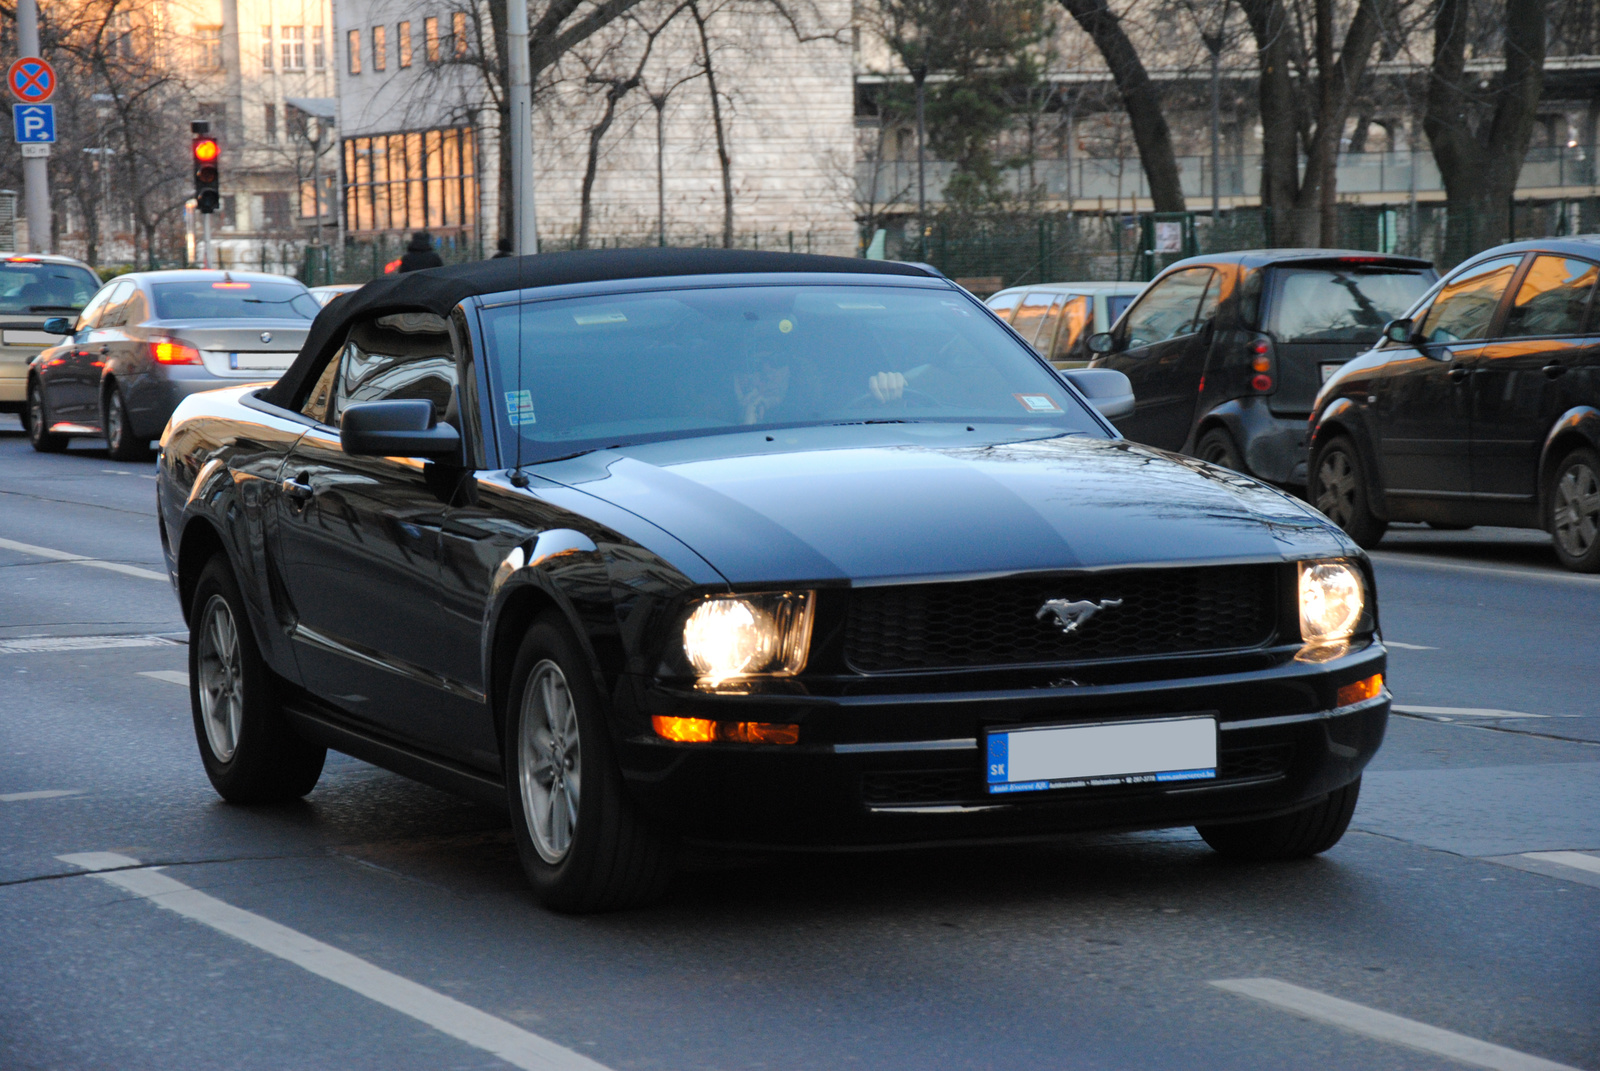 Mustang45